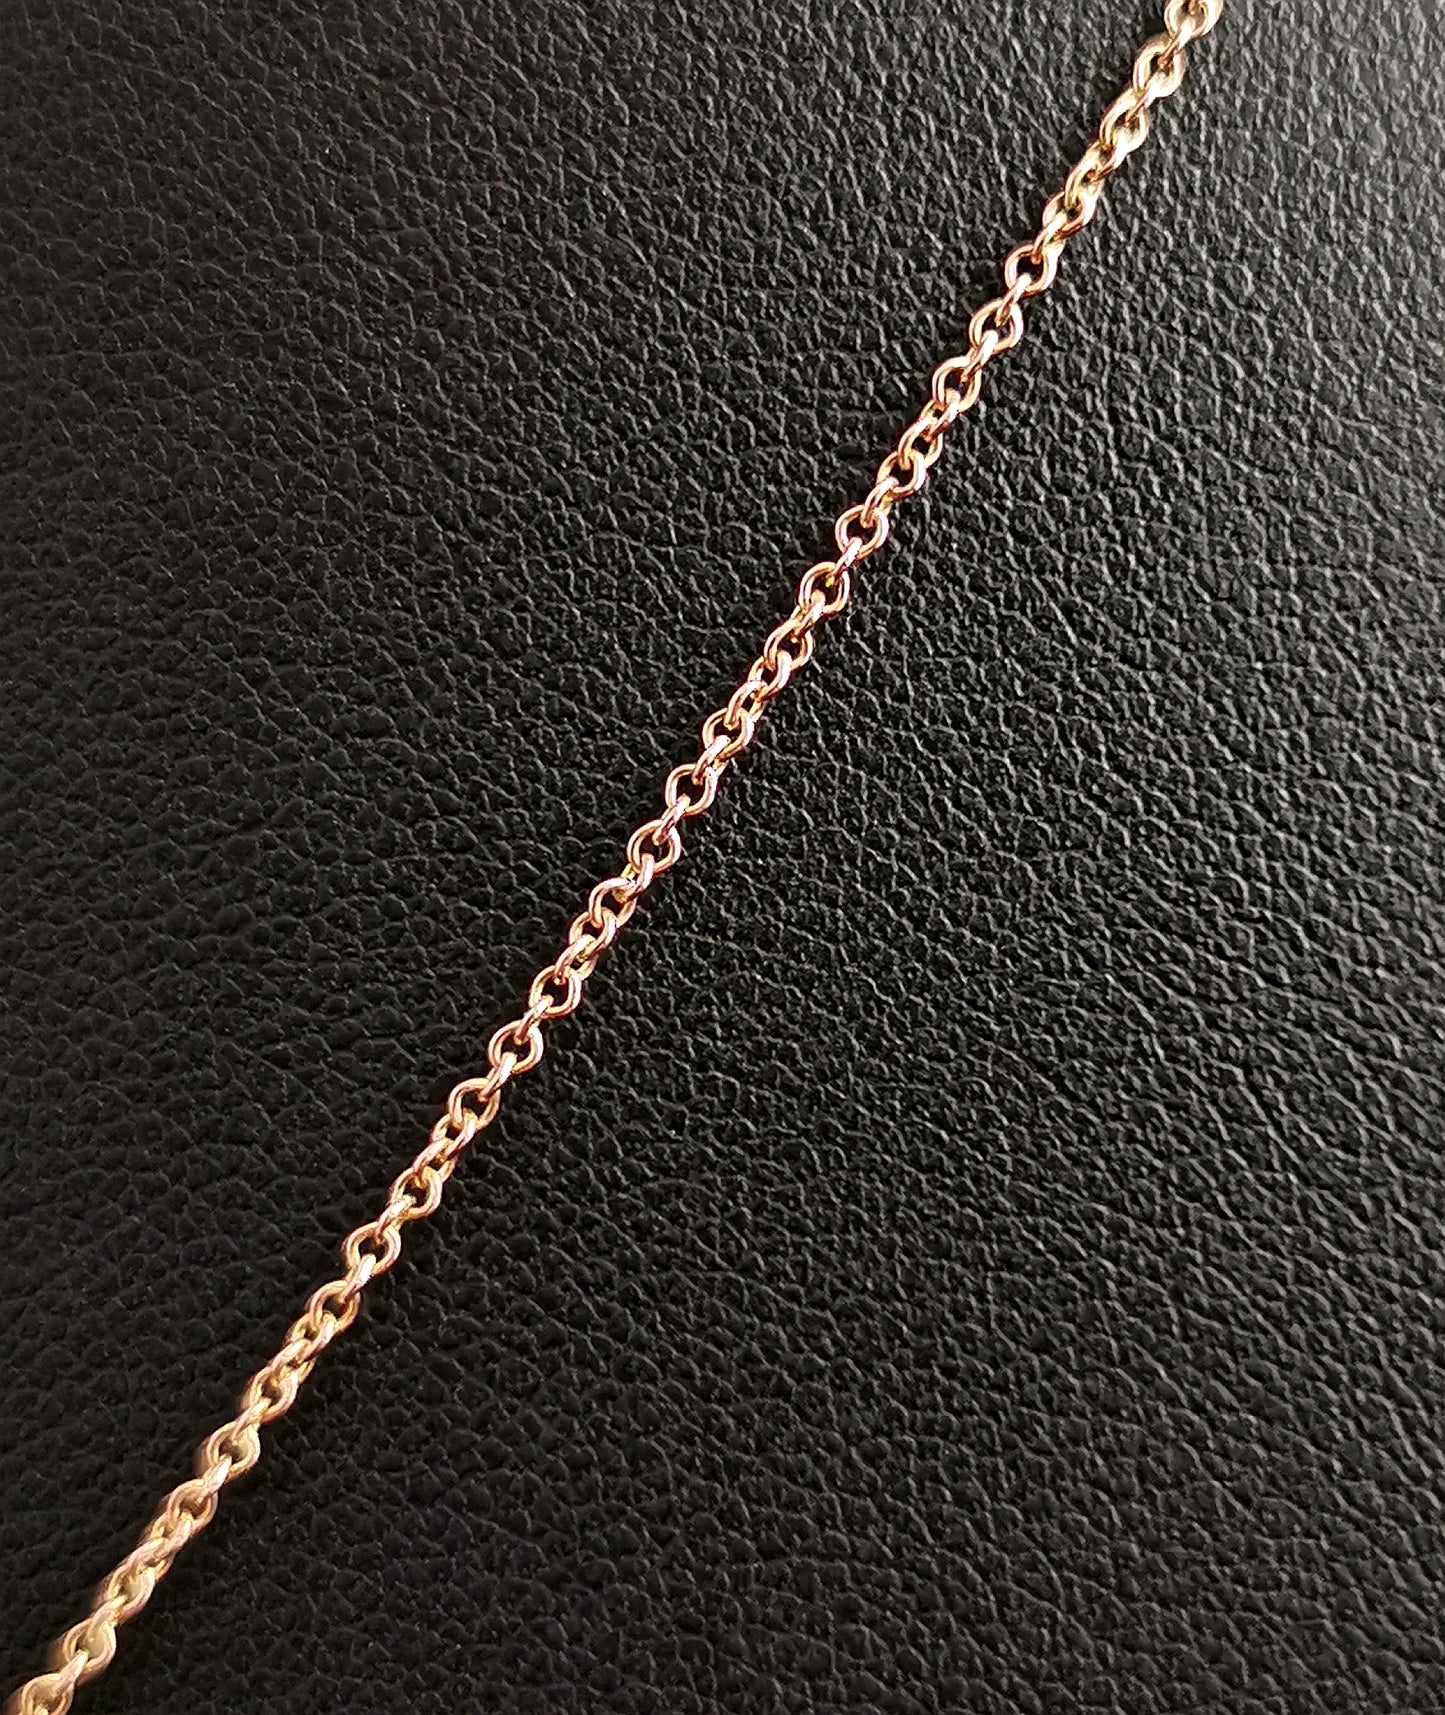 Antique Opal and Diamond drop pendant necklace, 9ct gold